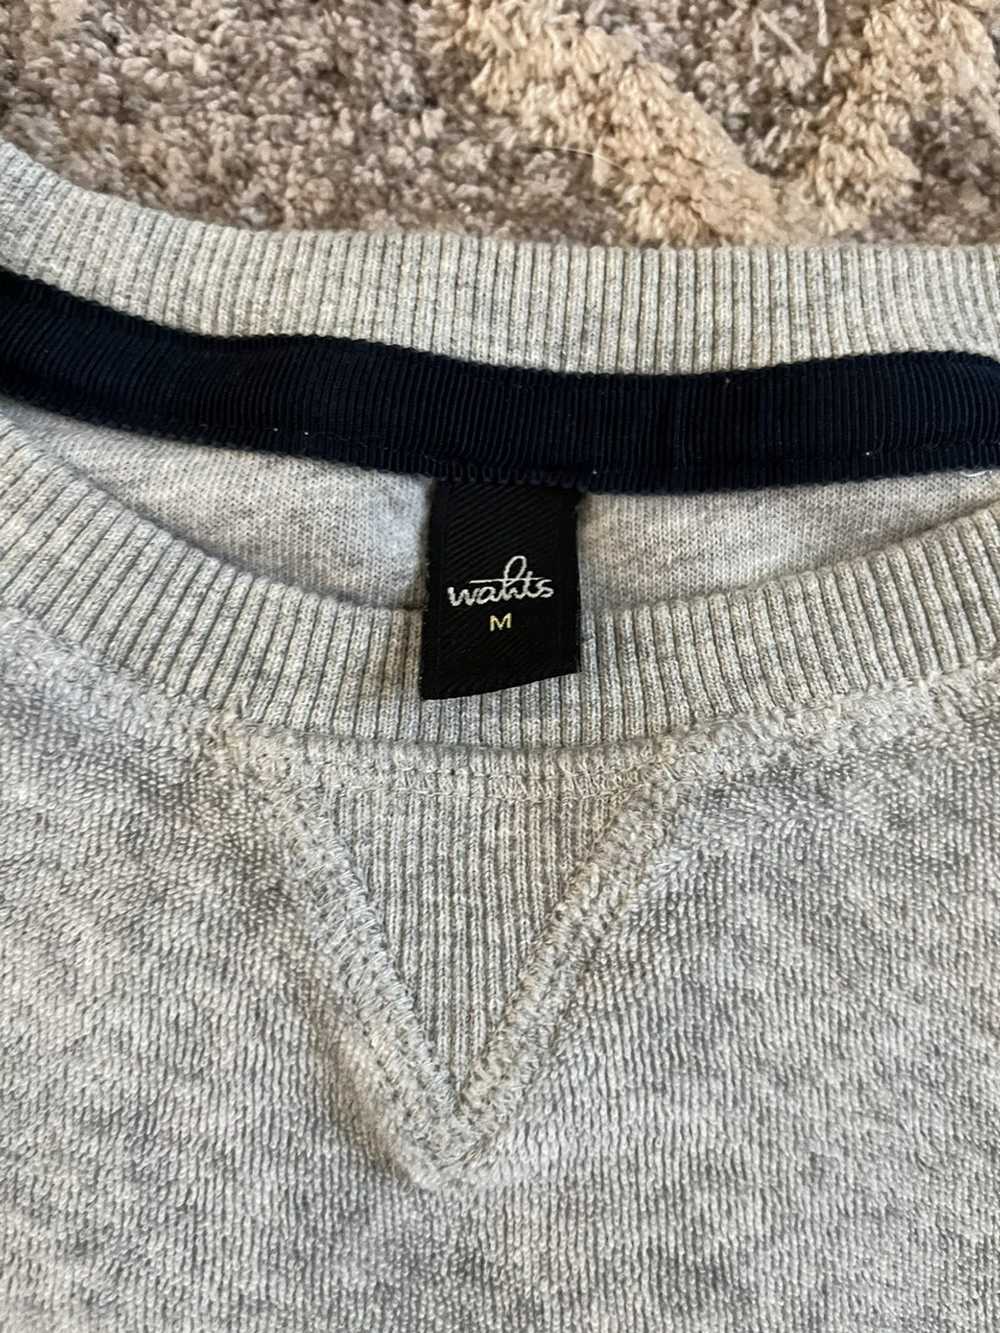 Designer Wahts Sweater - image 3